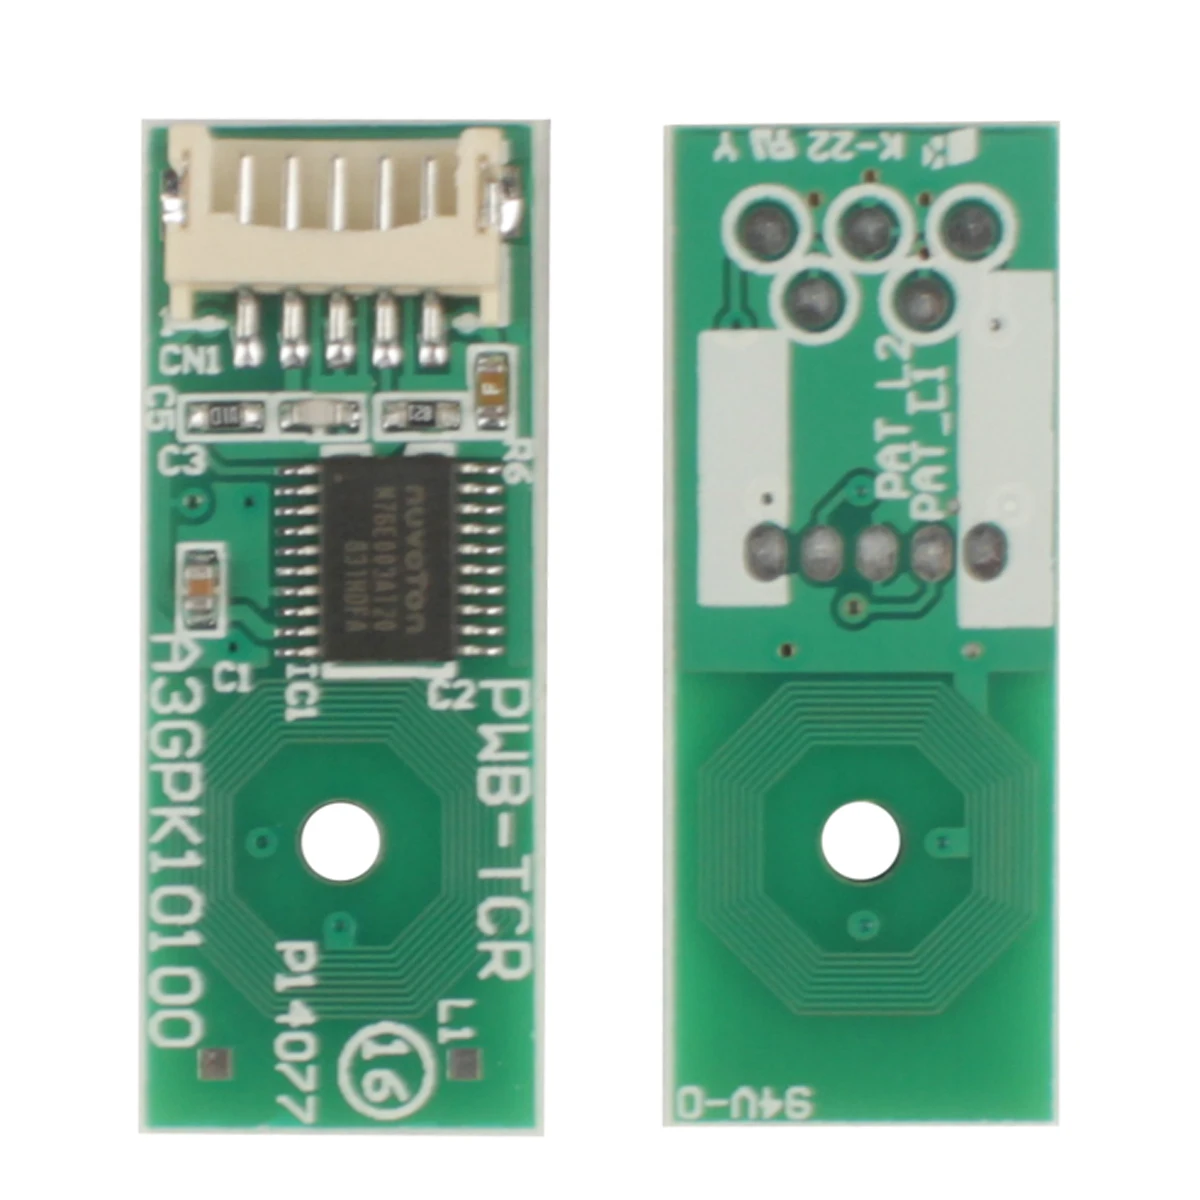 20 x IUP22 IUP-22 IUP 22 Compatible for Konica Minolta C3350 3850 C 3350 C 3850 drum unit chip Imaging cartridge kit reset chip